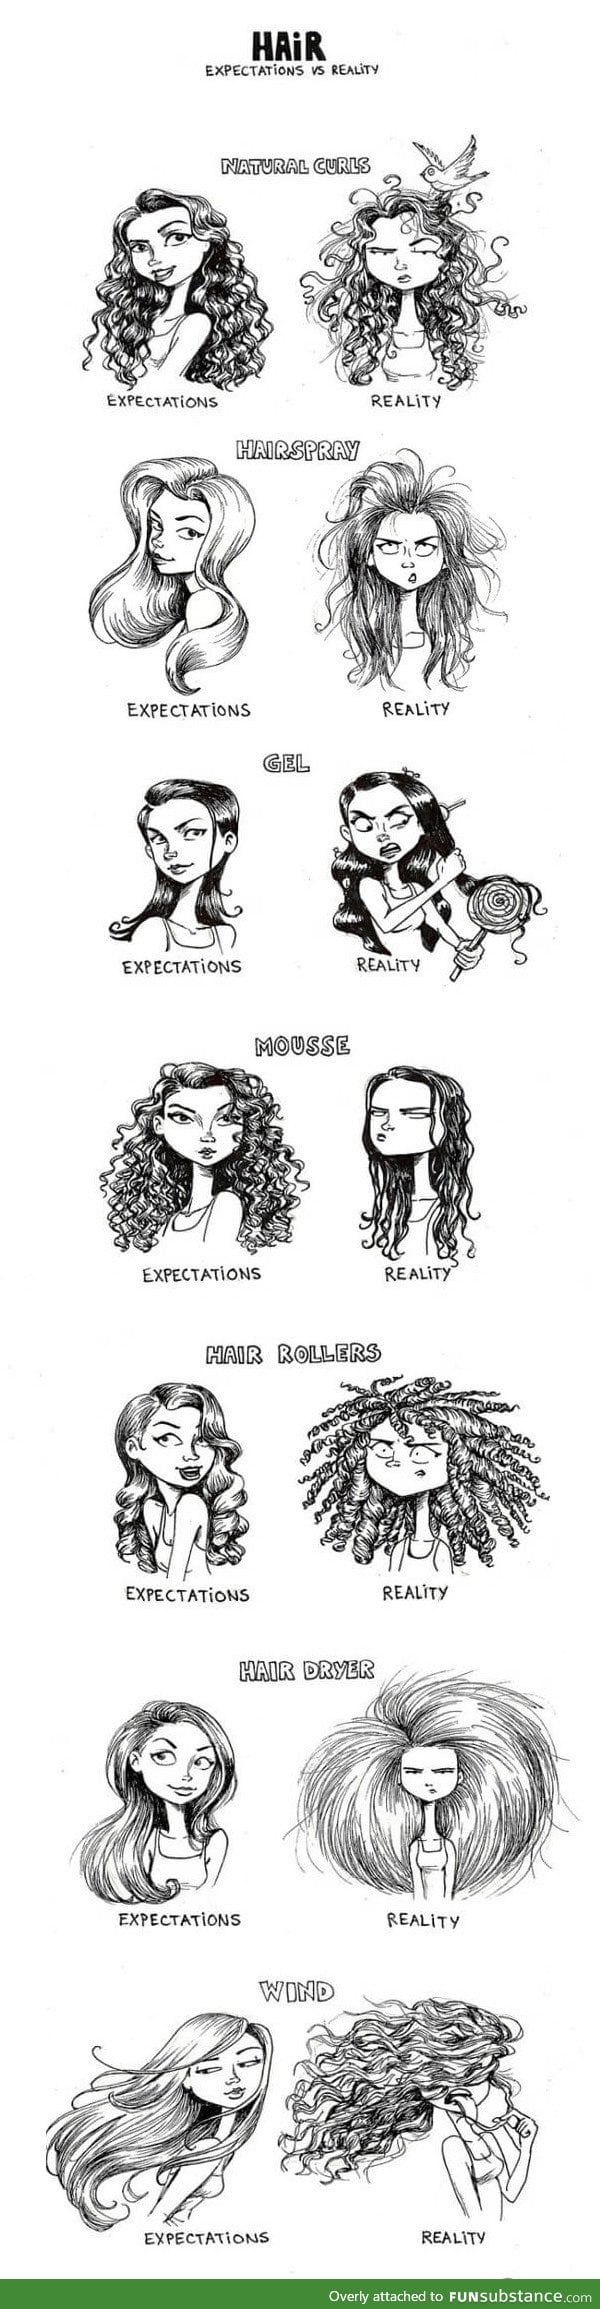 Womens hair: Expectations vs reality